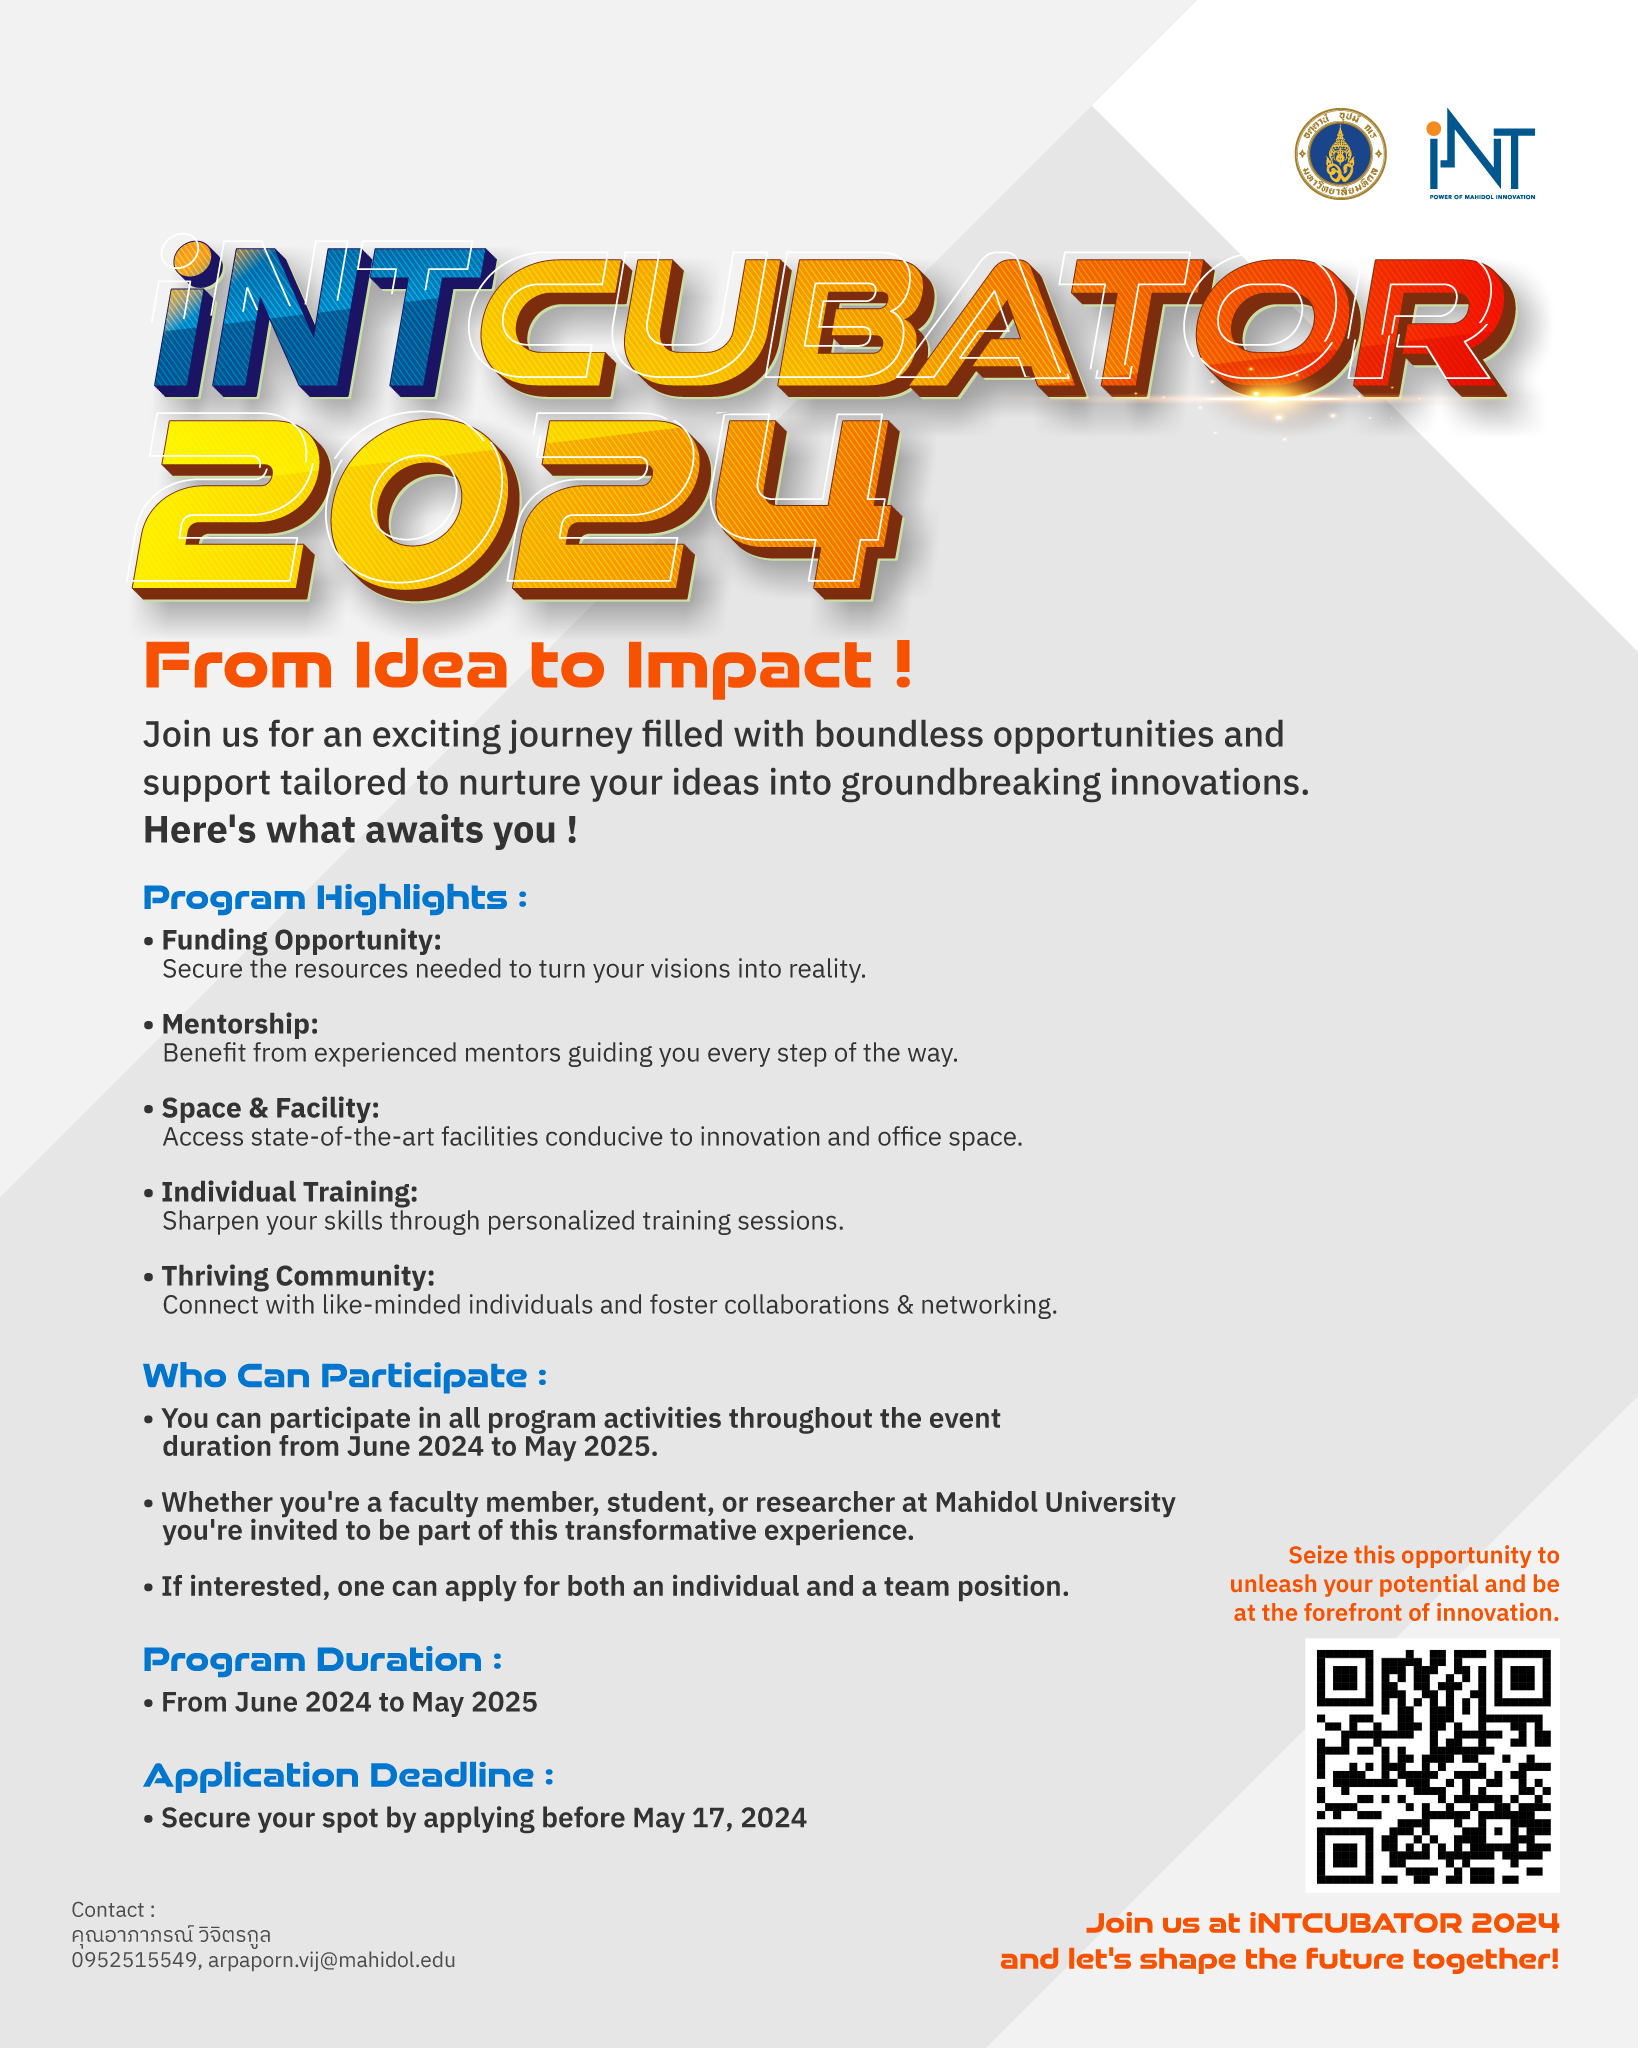 iNTCUBATOR 2024: From idea to impact